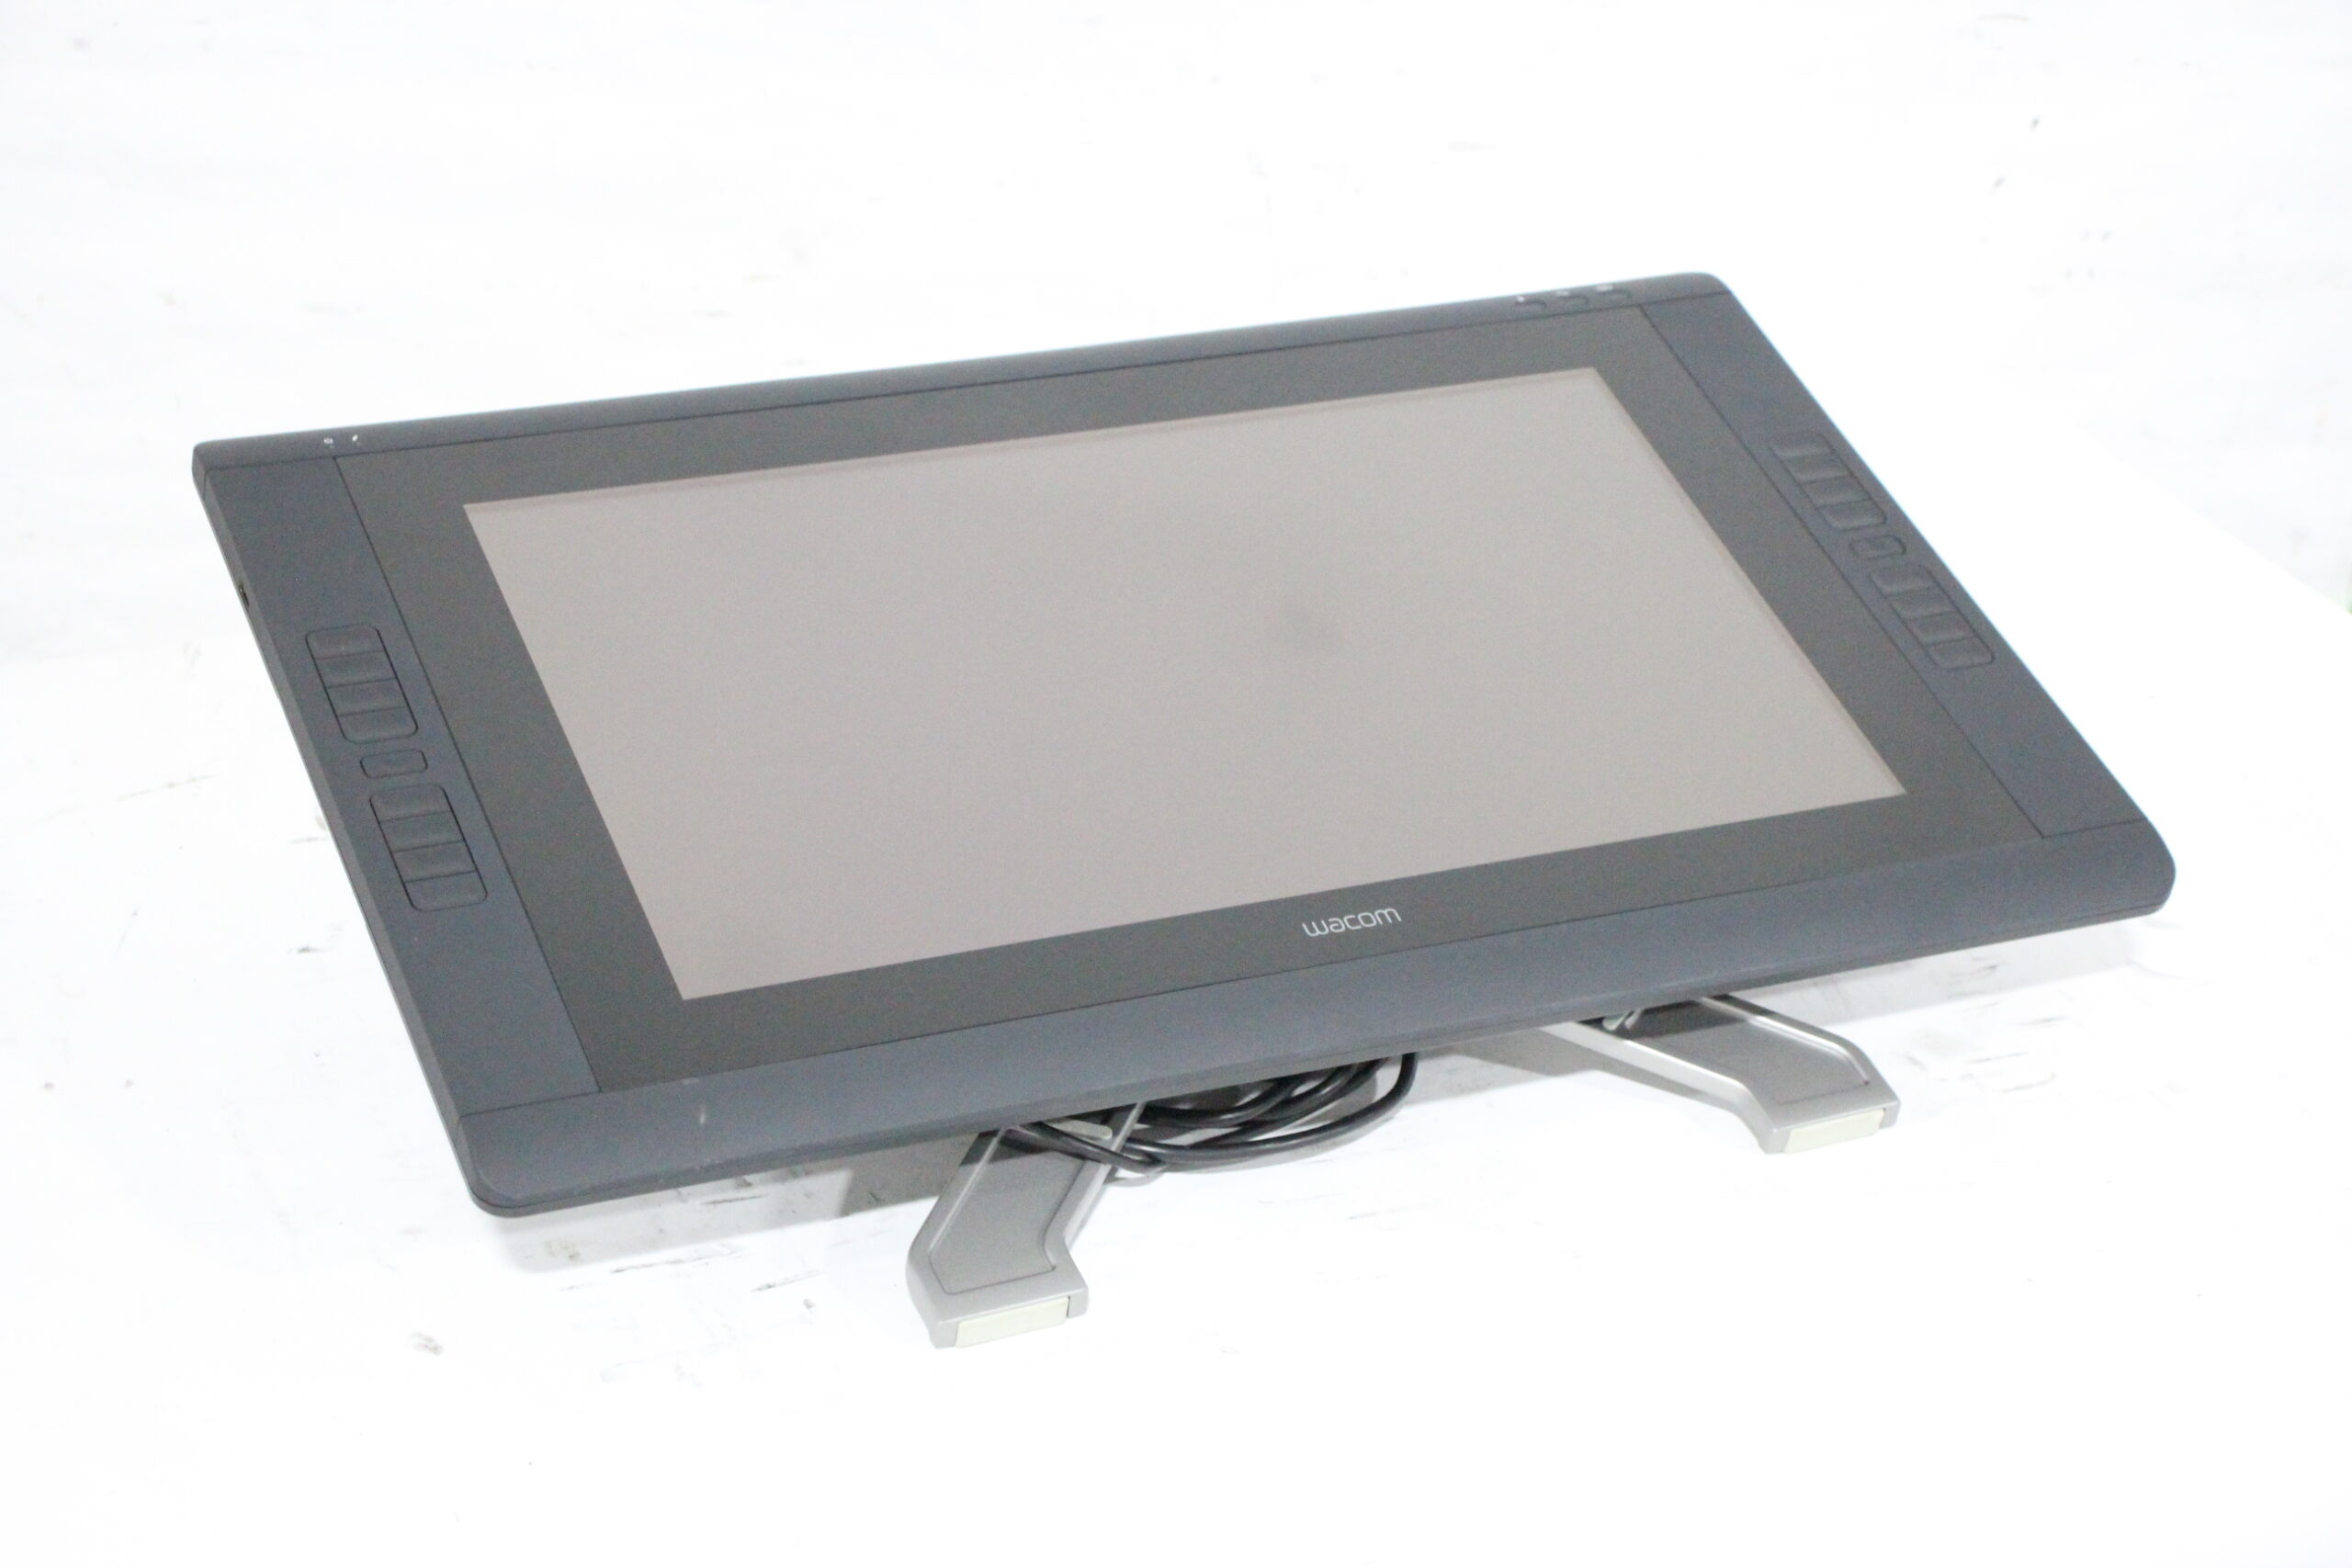 Wacom DTH-2200 Cintiq 22HD Touch LCD Tablet w/ Mount, Stylus, & Pelican  1630 Case